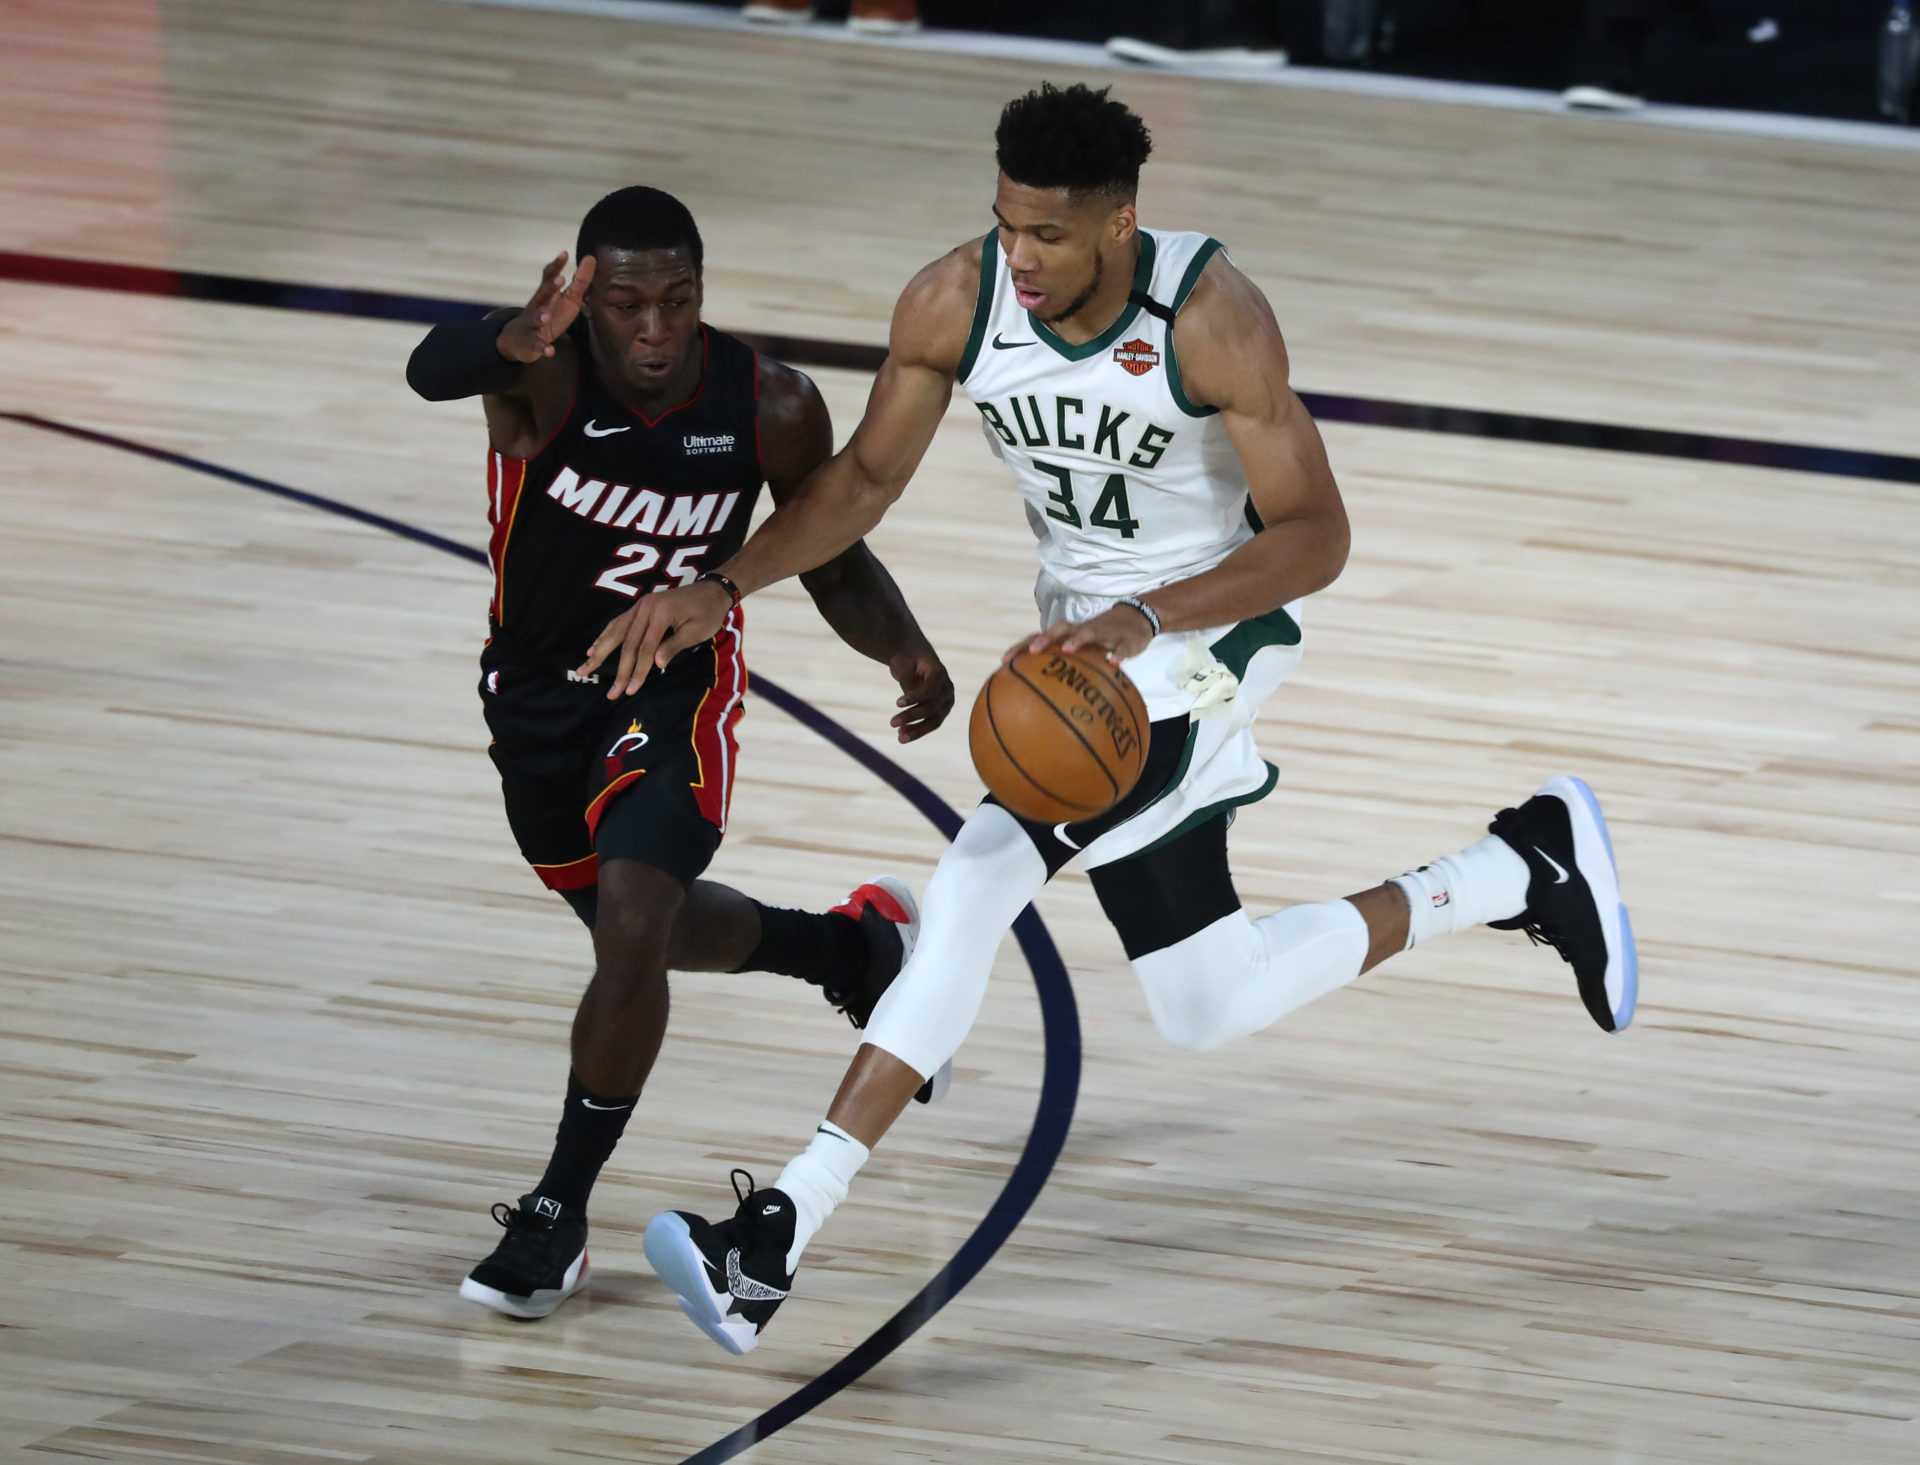 L'attaquant des Milwaukee Bucks Giannis Antetokounmpo joue contre le gardien des Heat de Miami Kendrick Nunn